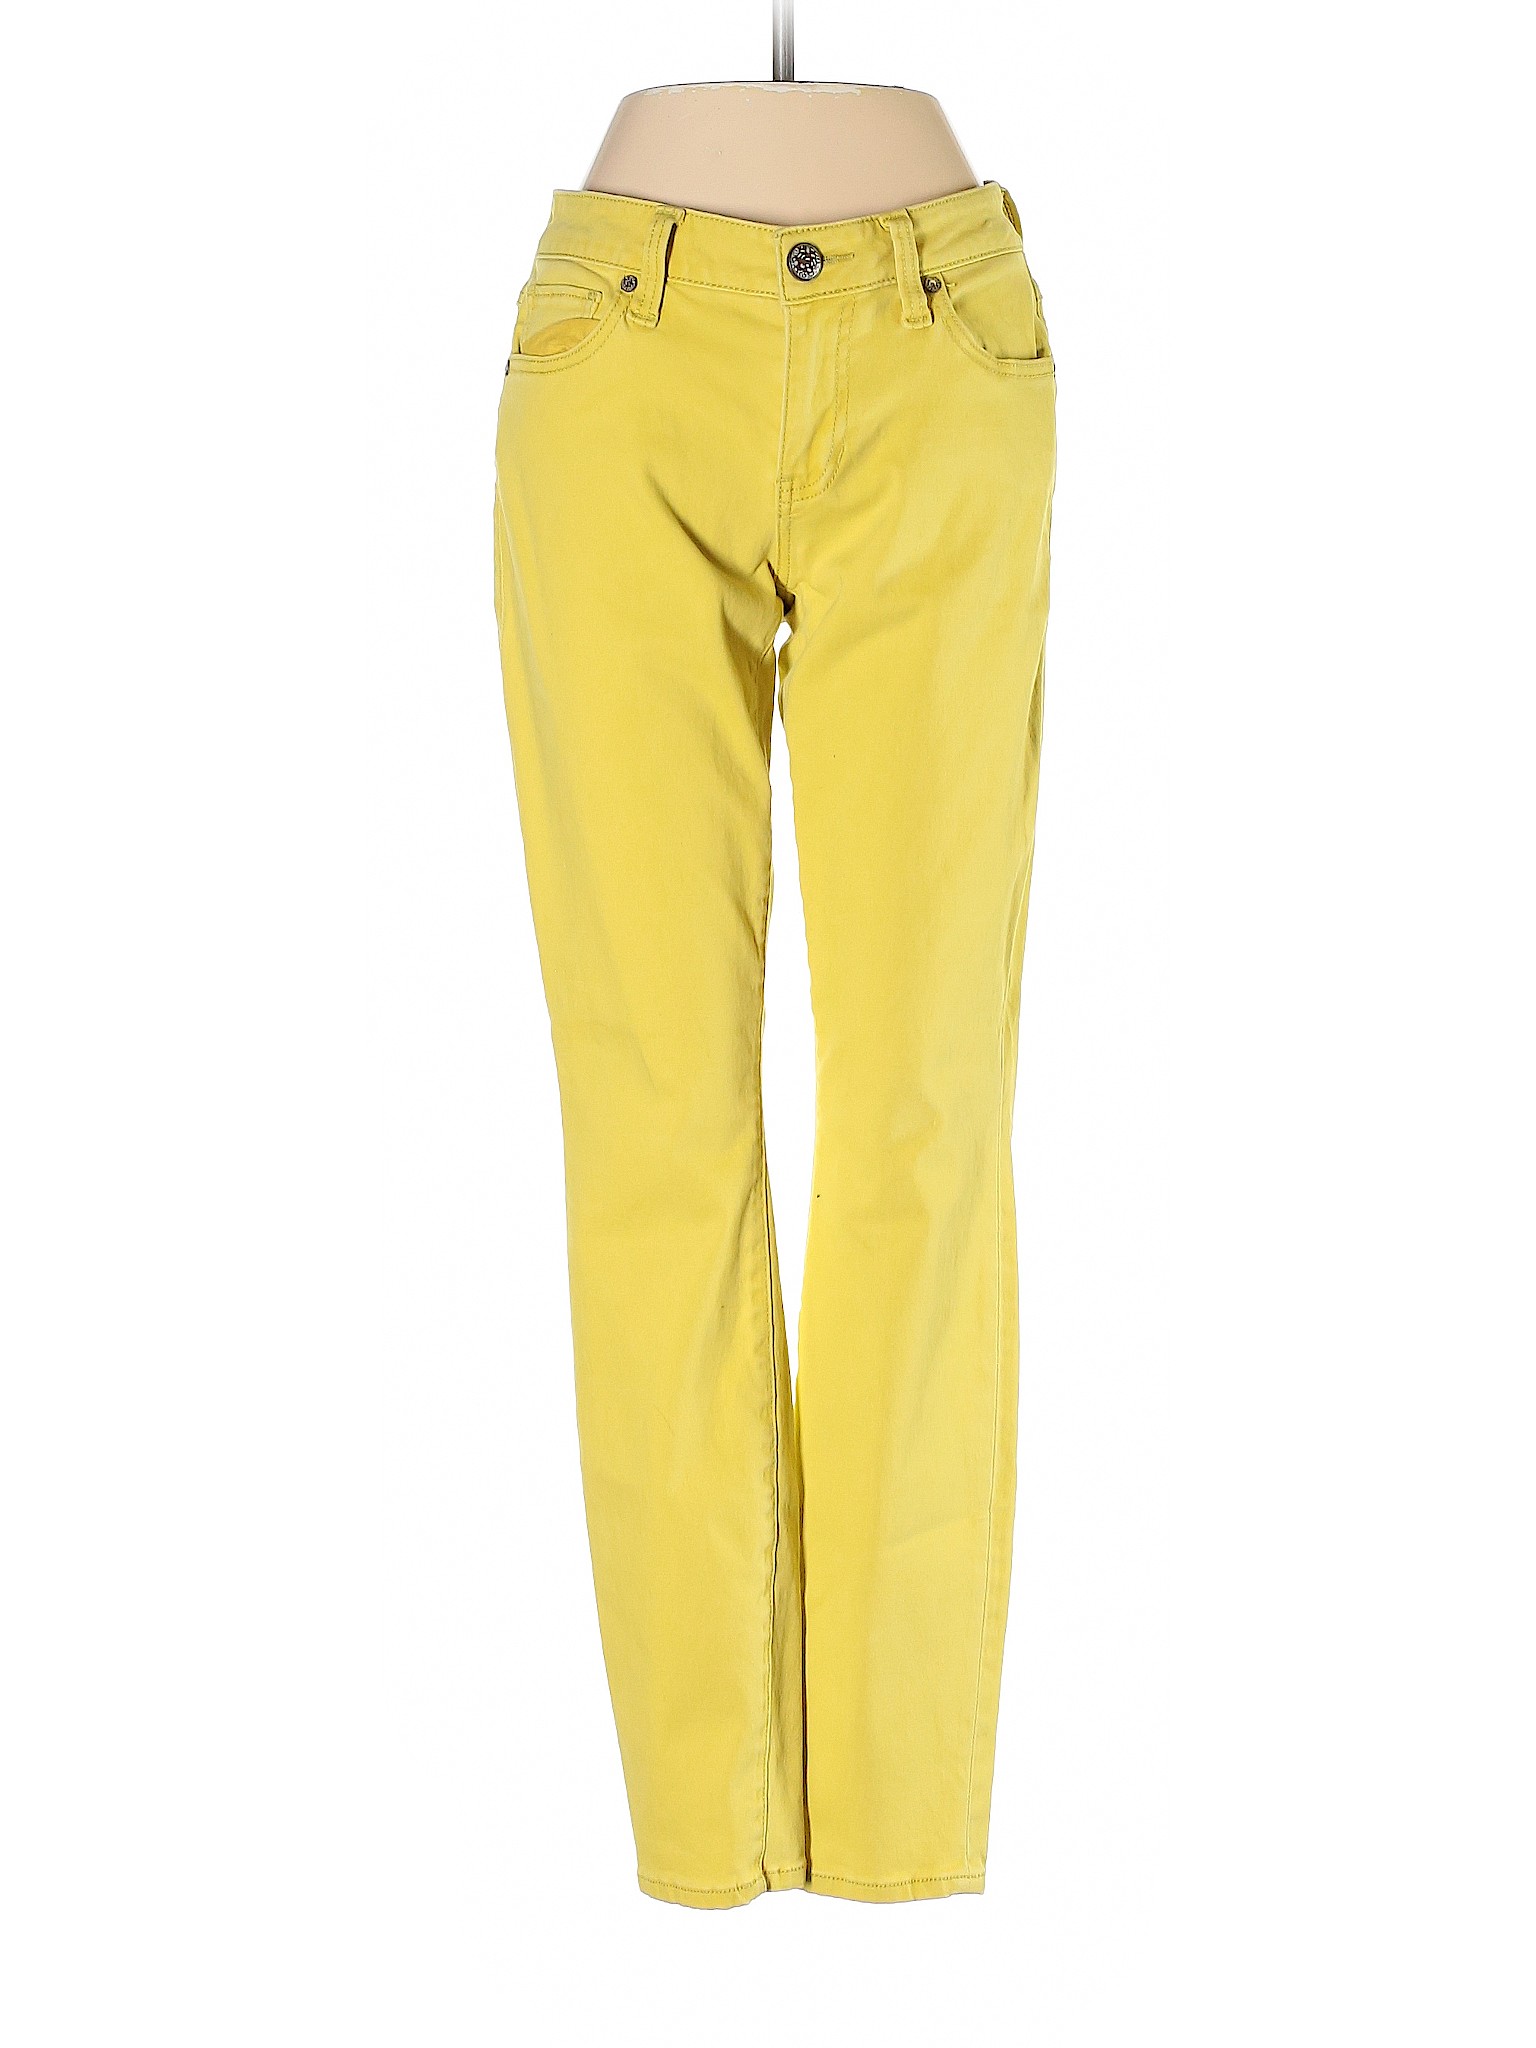 CAbi Women Yellow Jeans 2 | eBay